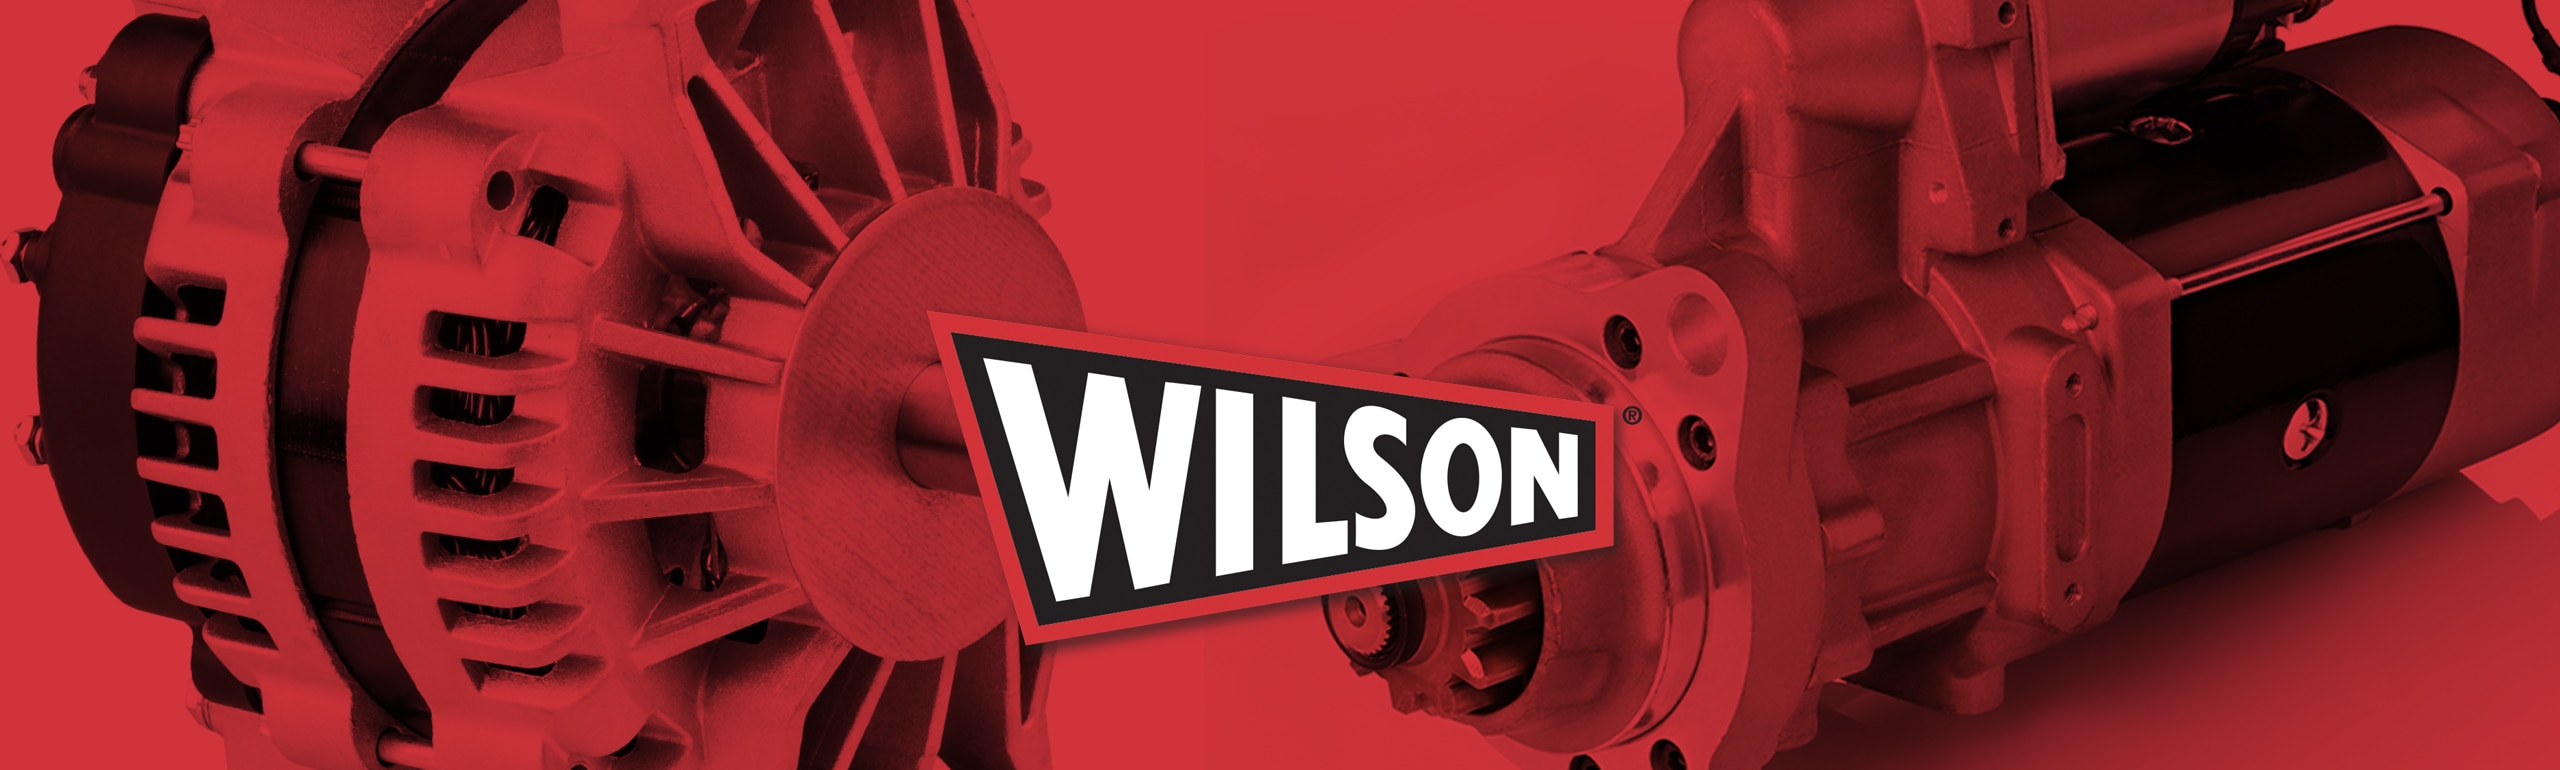 Wilson Banner Image